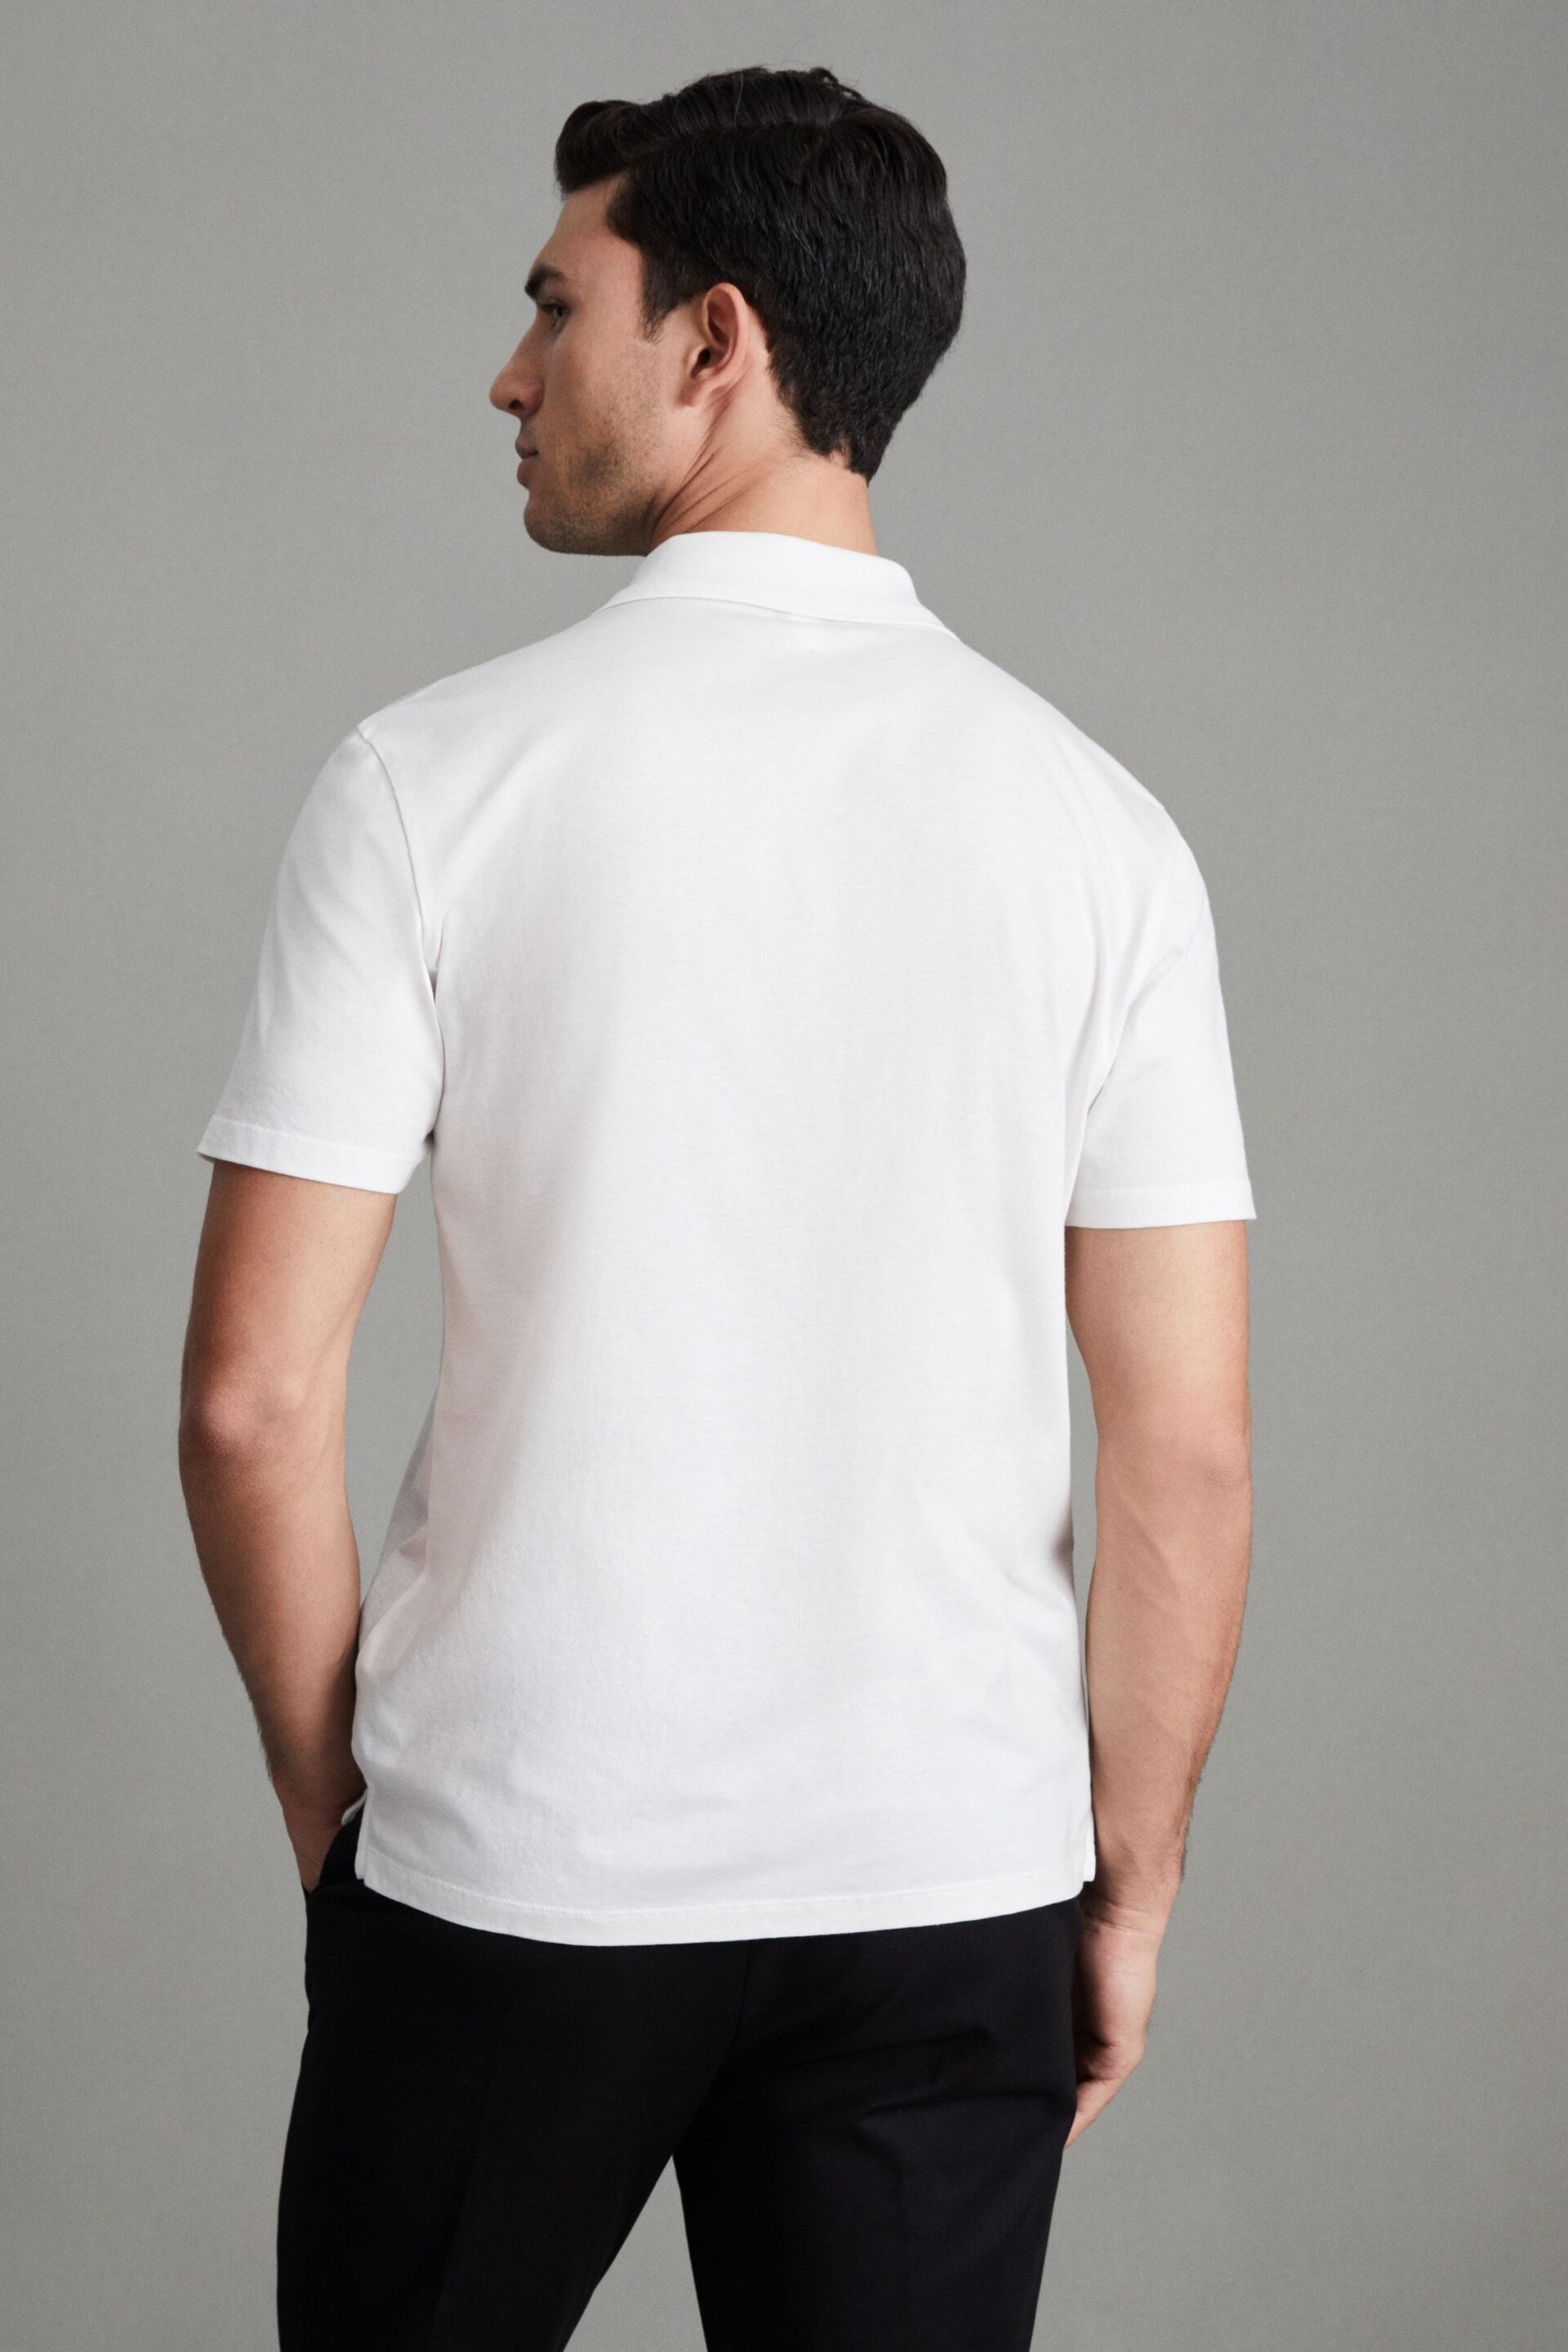 Reiss White Austin Mercerised Cotton Polo Shirt - Image 3 of 6